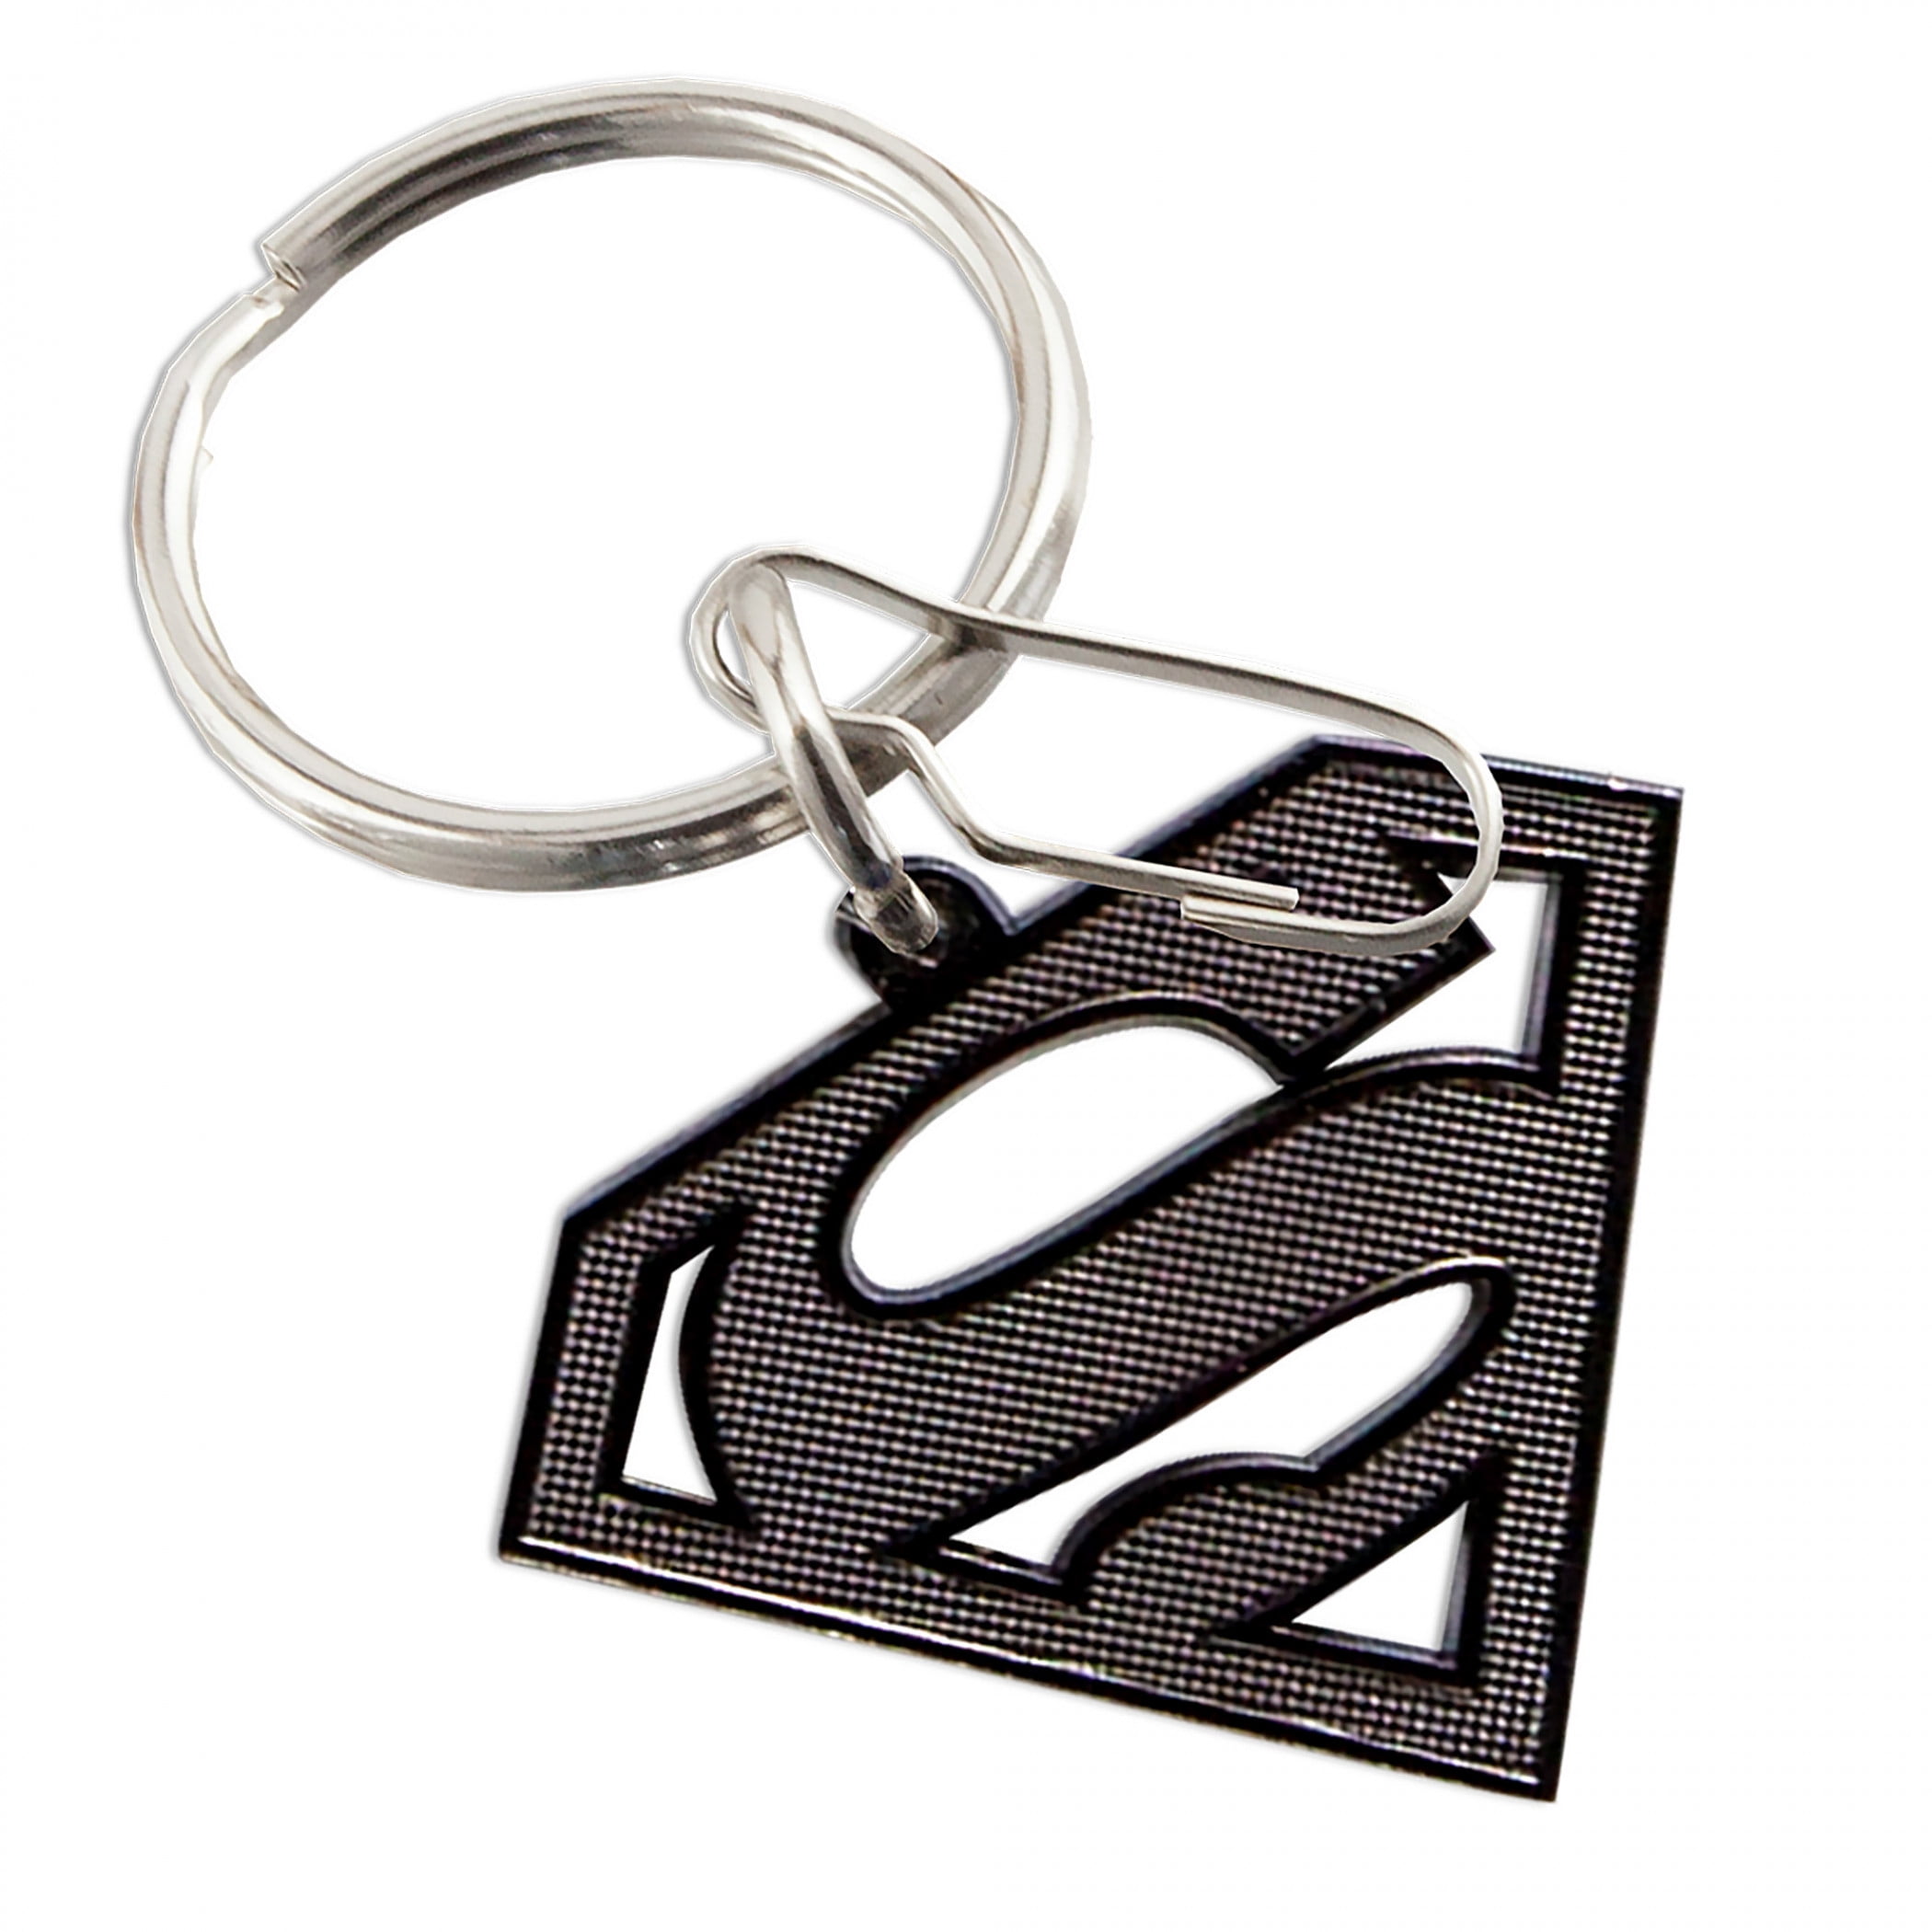 DC Comics Superman Design Logo Alloy Key Chains Keychain Keyfob Keyring 